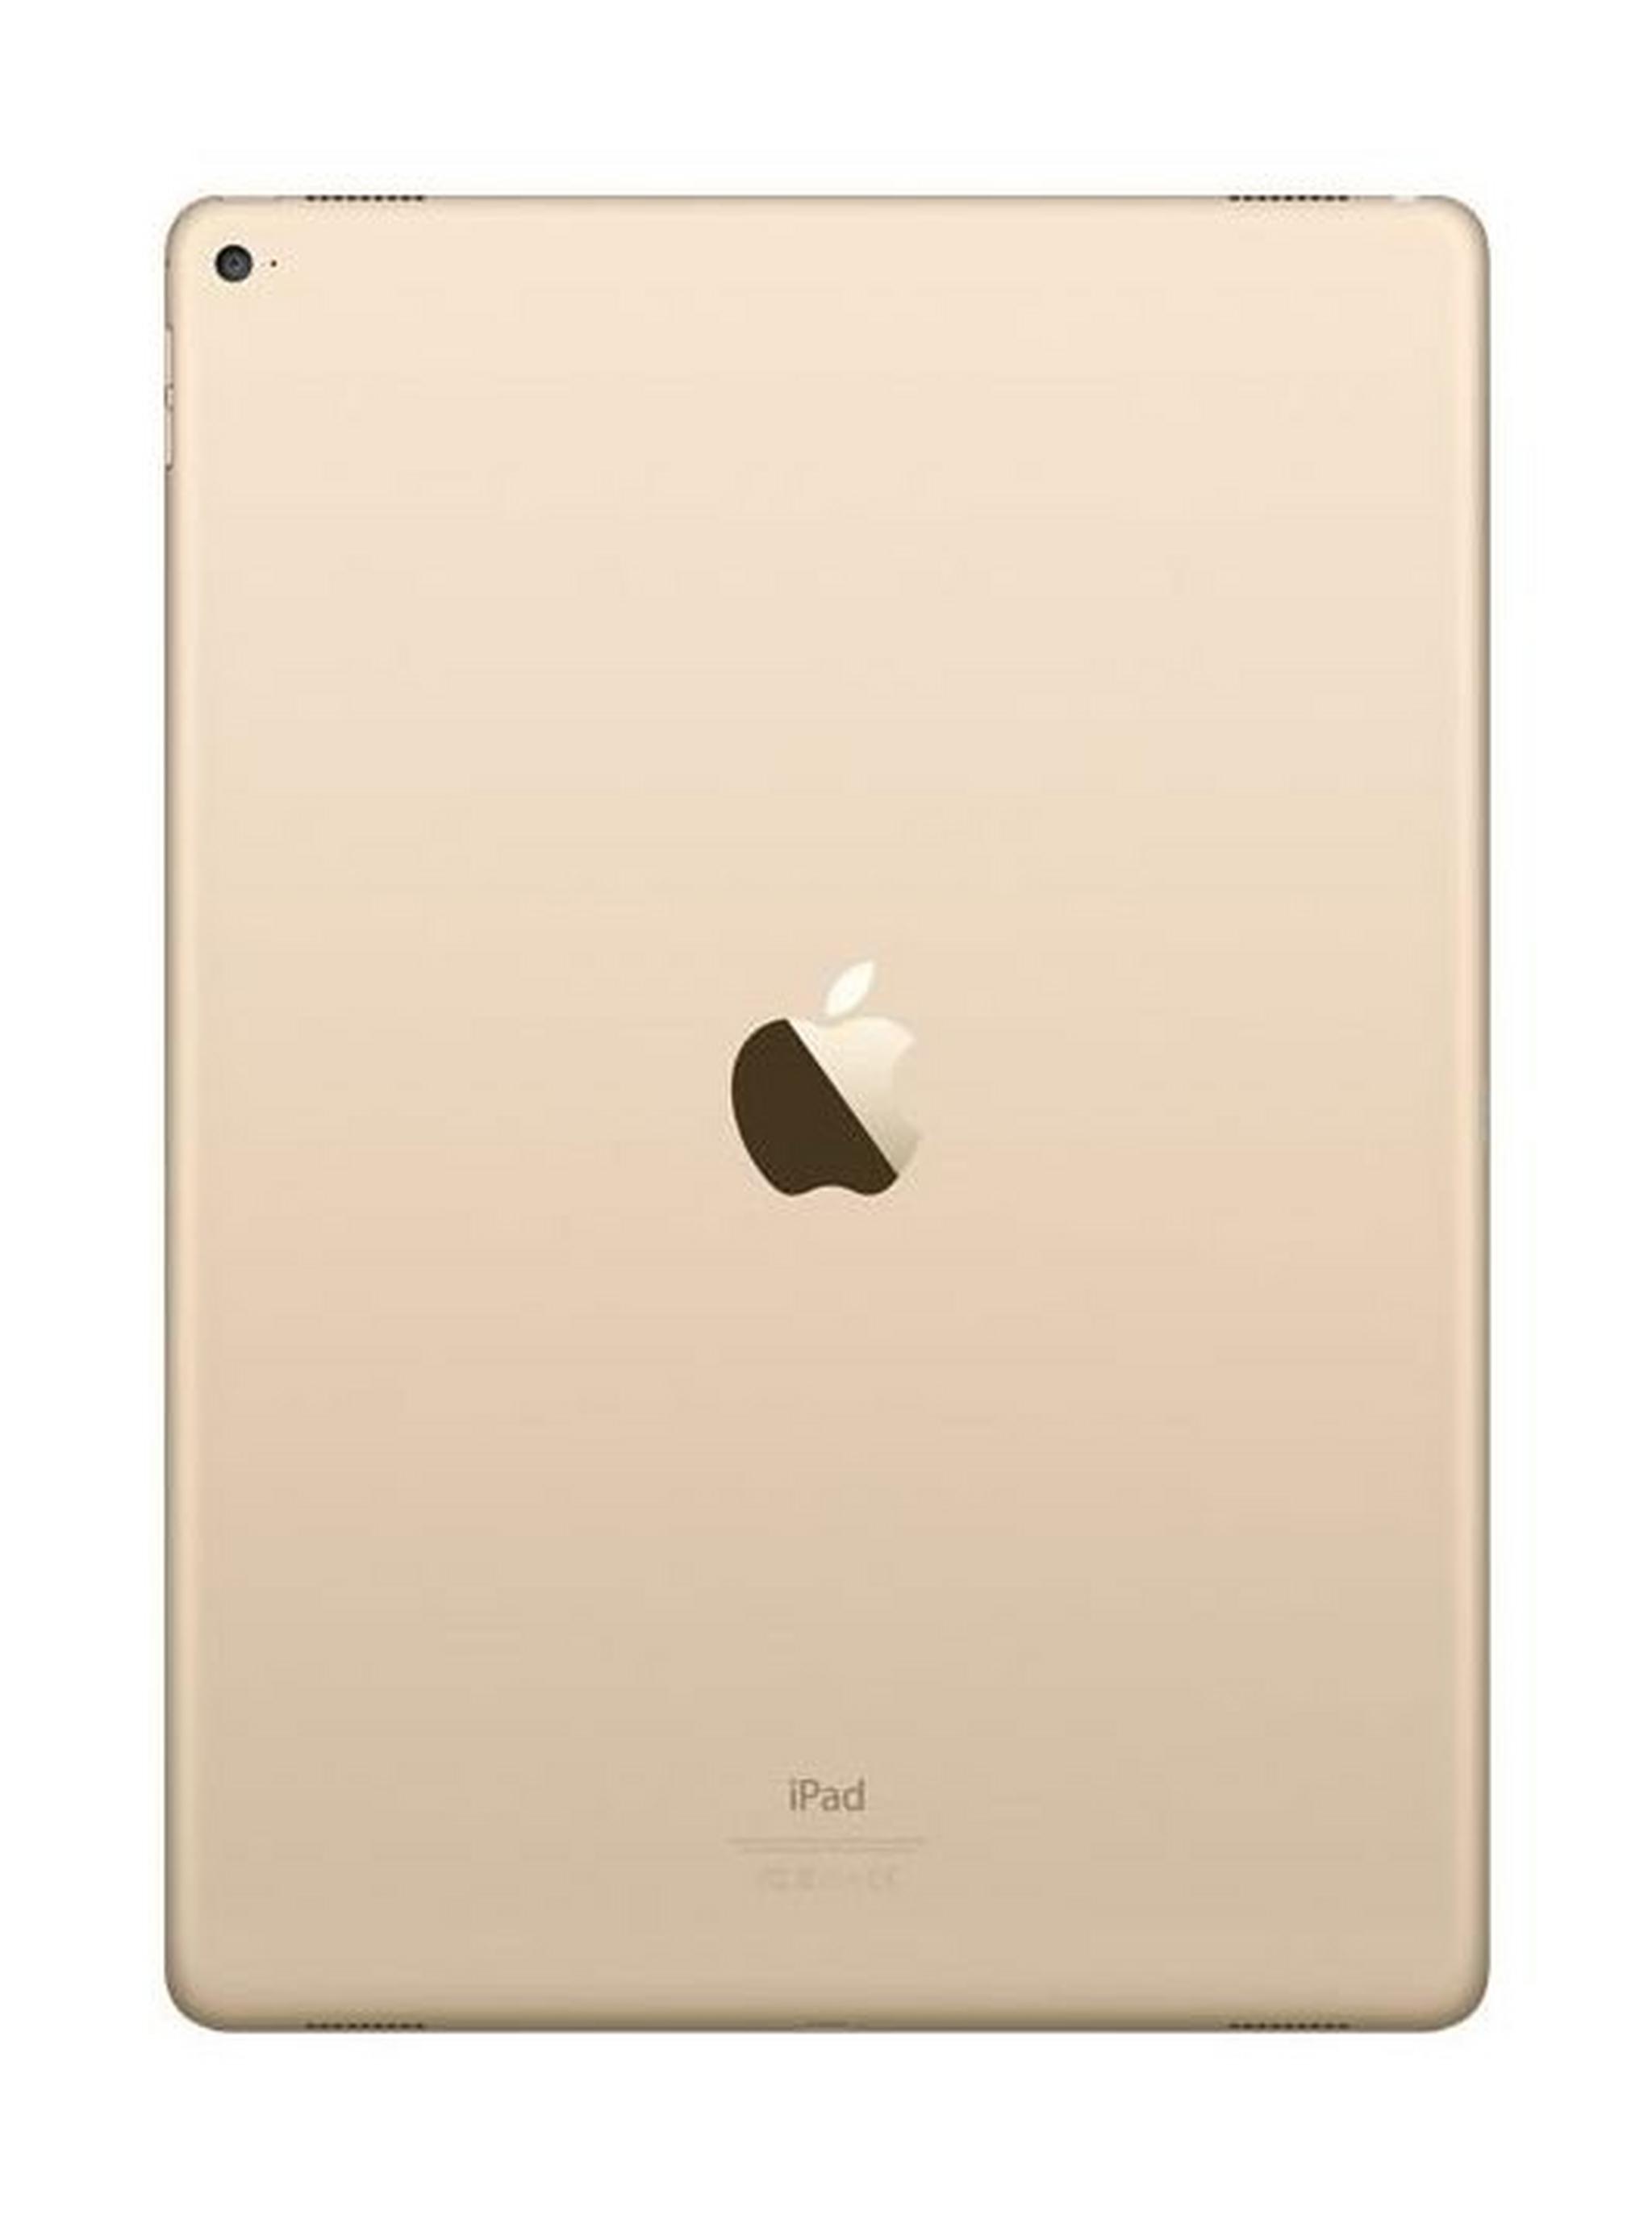 APPLE iPad Pro 12.9-inch 512GB WiFi Tablet - Gold